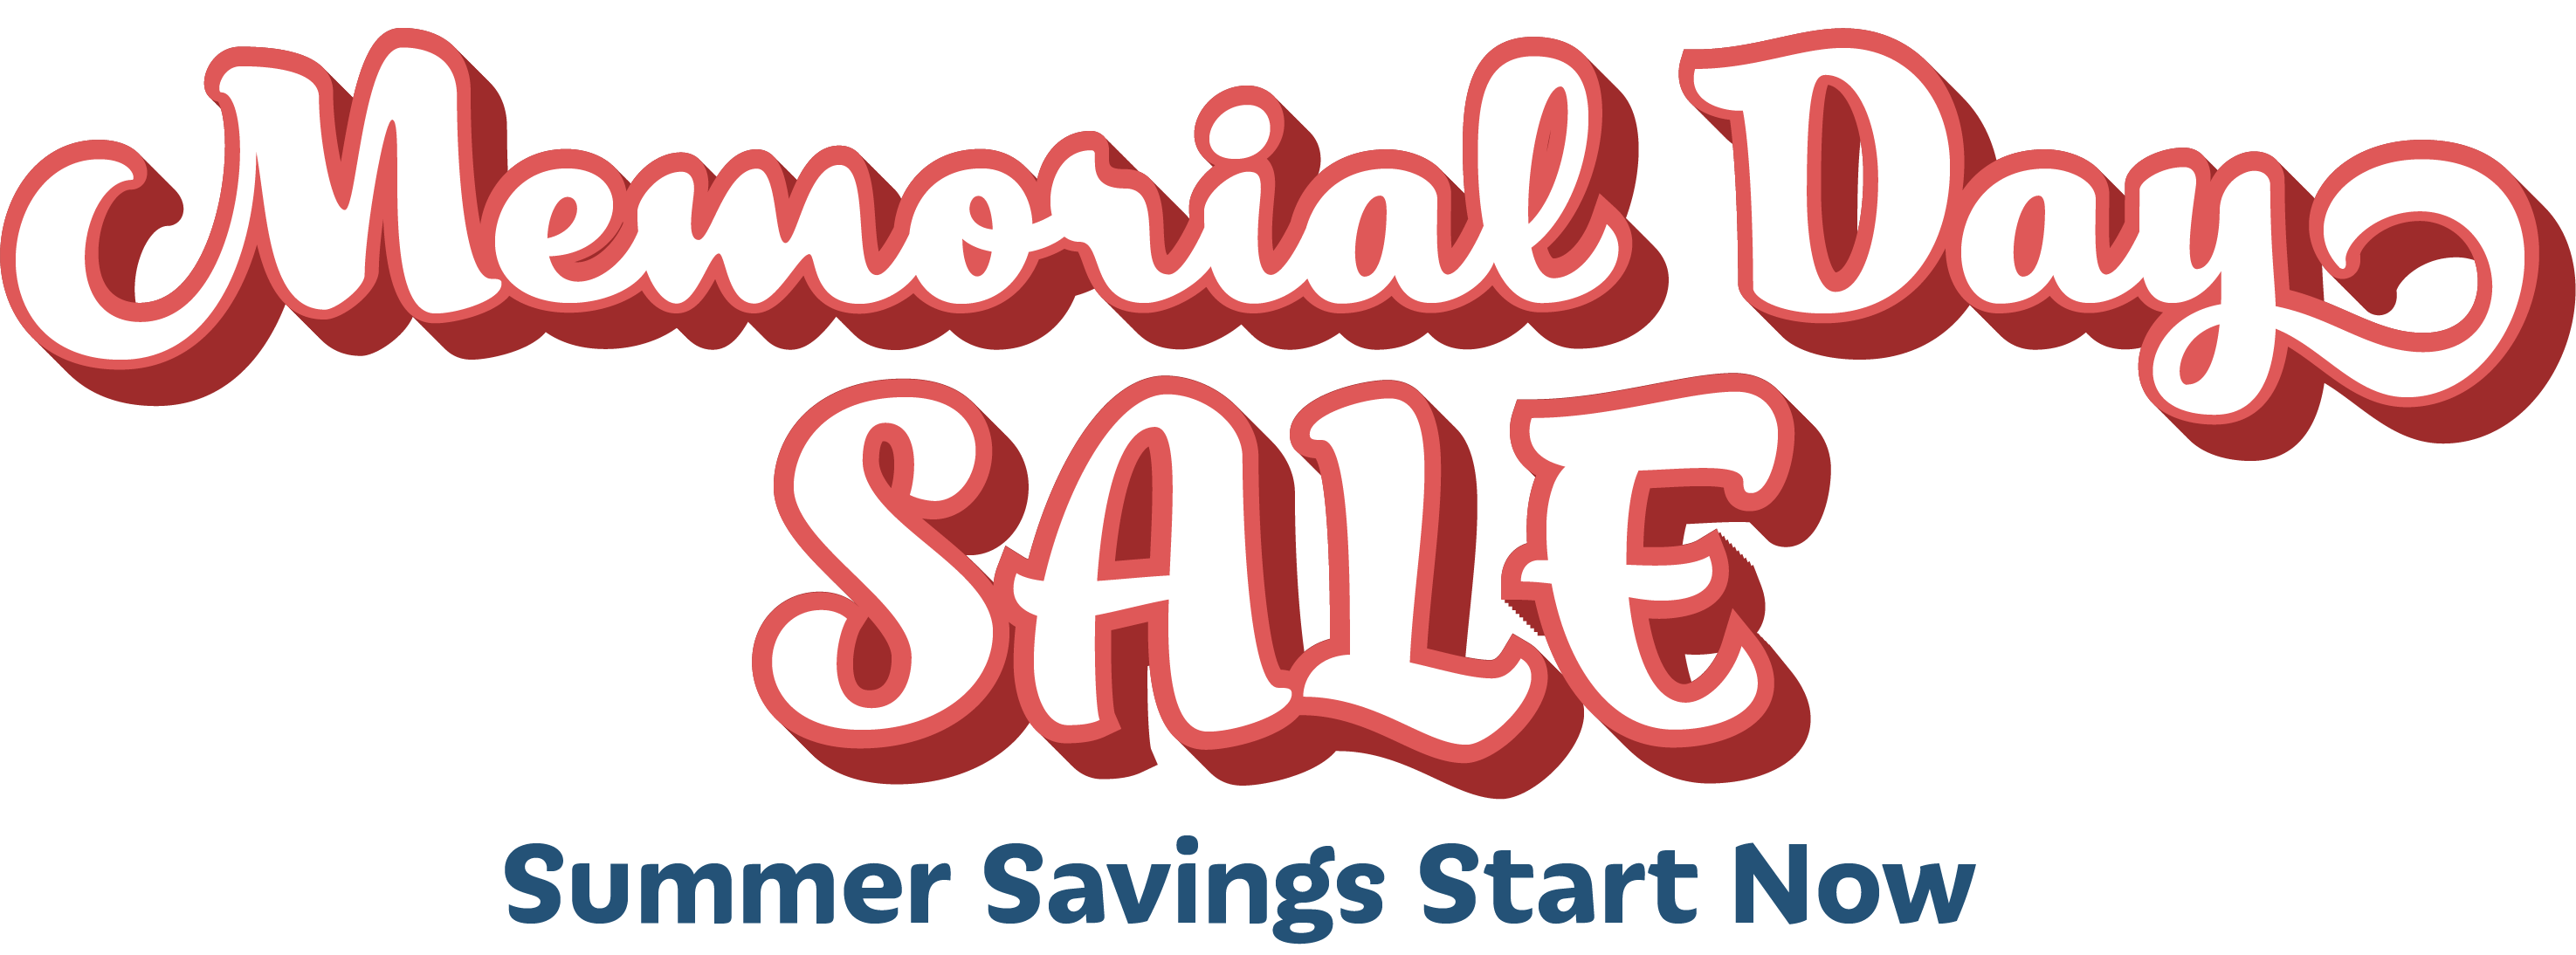 Memorial Day Sale - Summer Savings Start Now